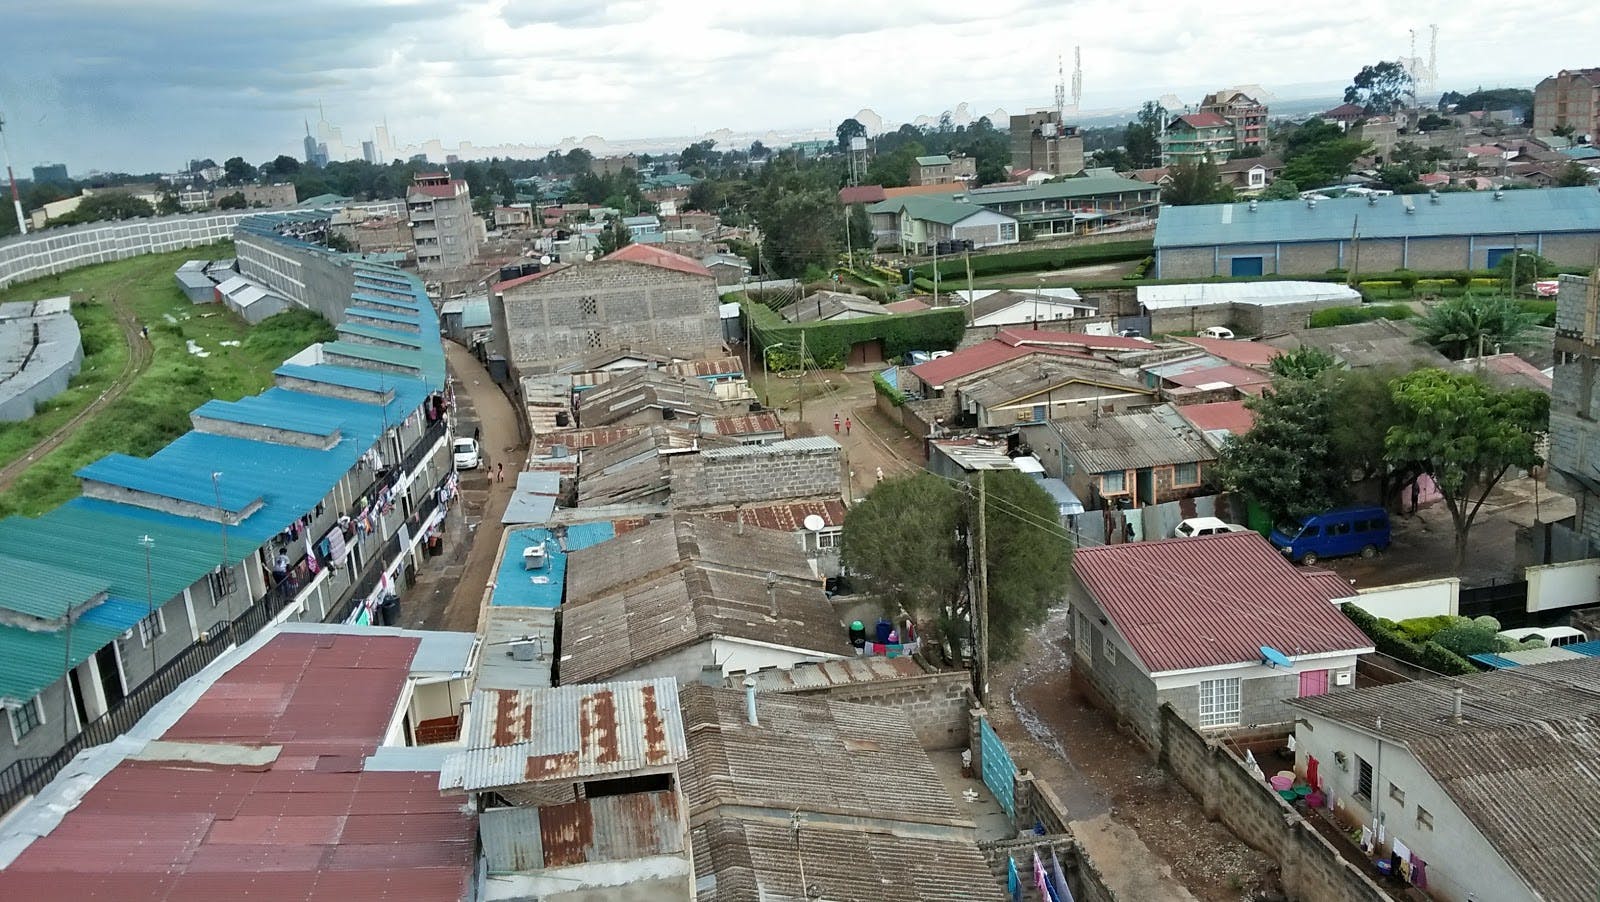 Image - Kibera slum